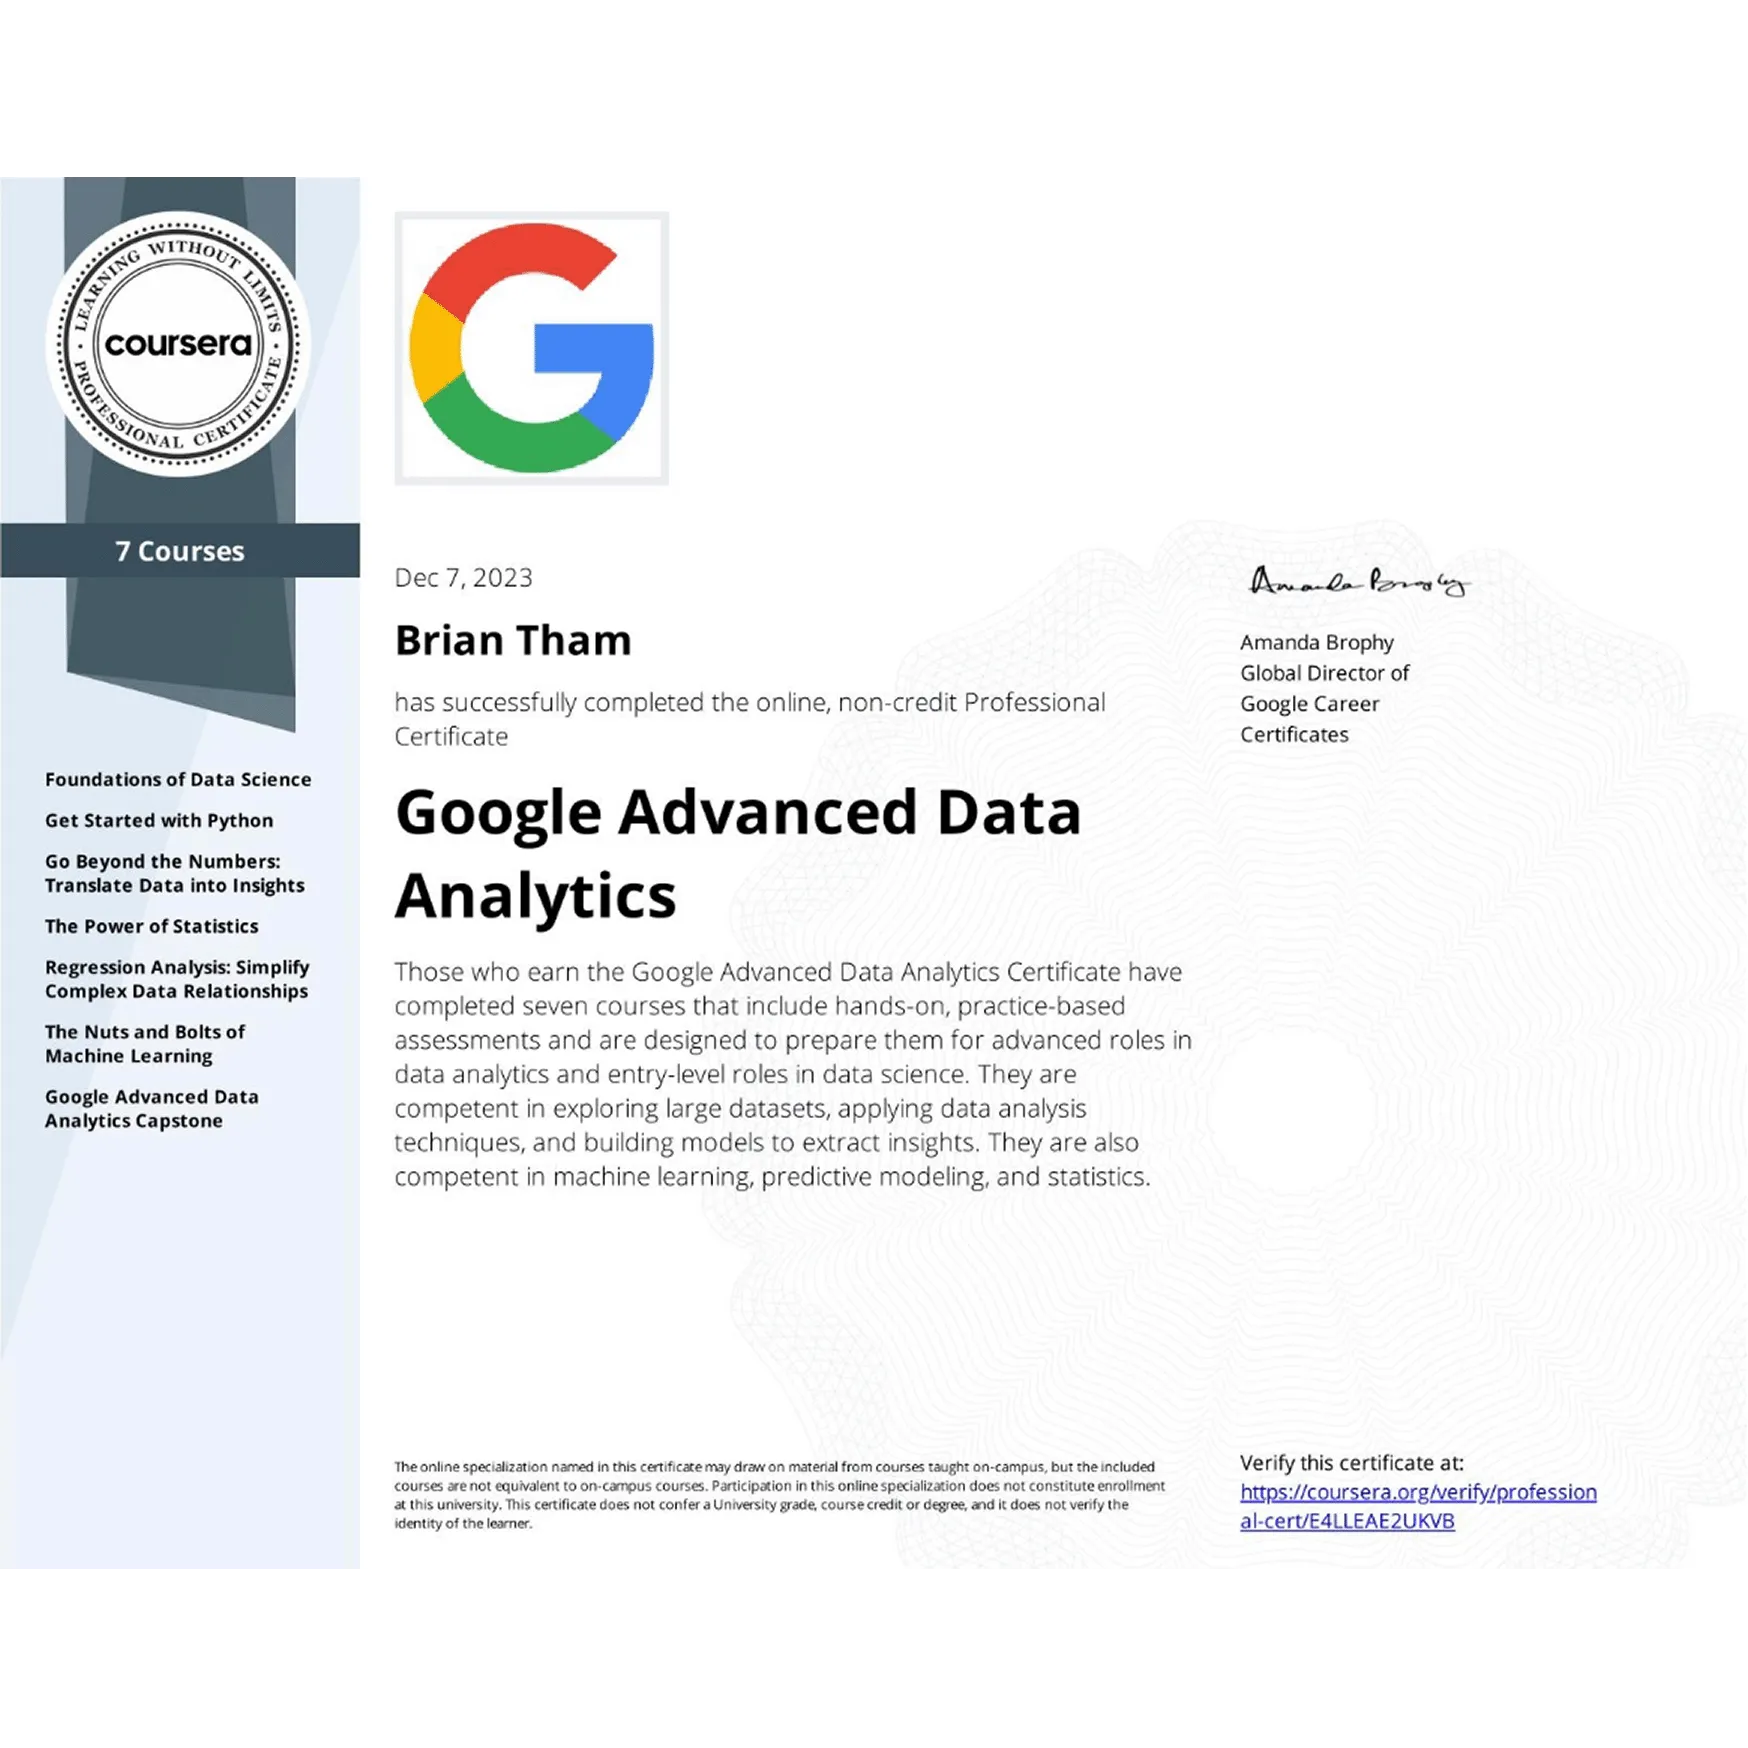 Google Advanced Data Analytics certificate awarded to Brian Tham